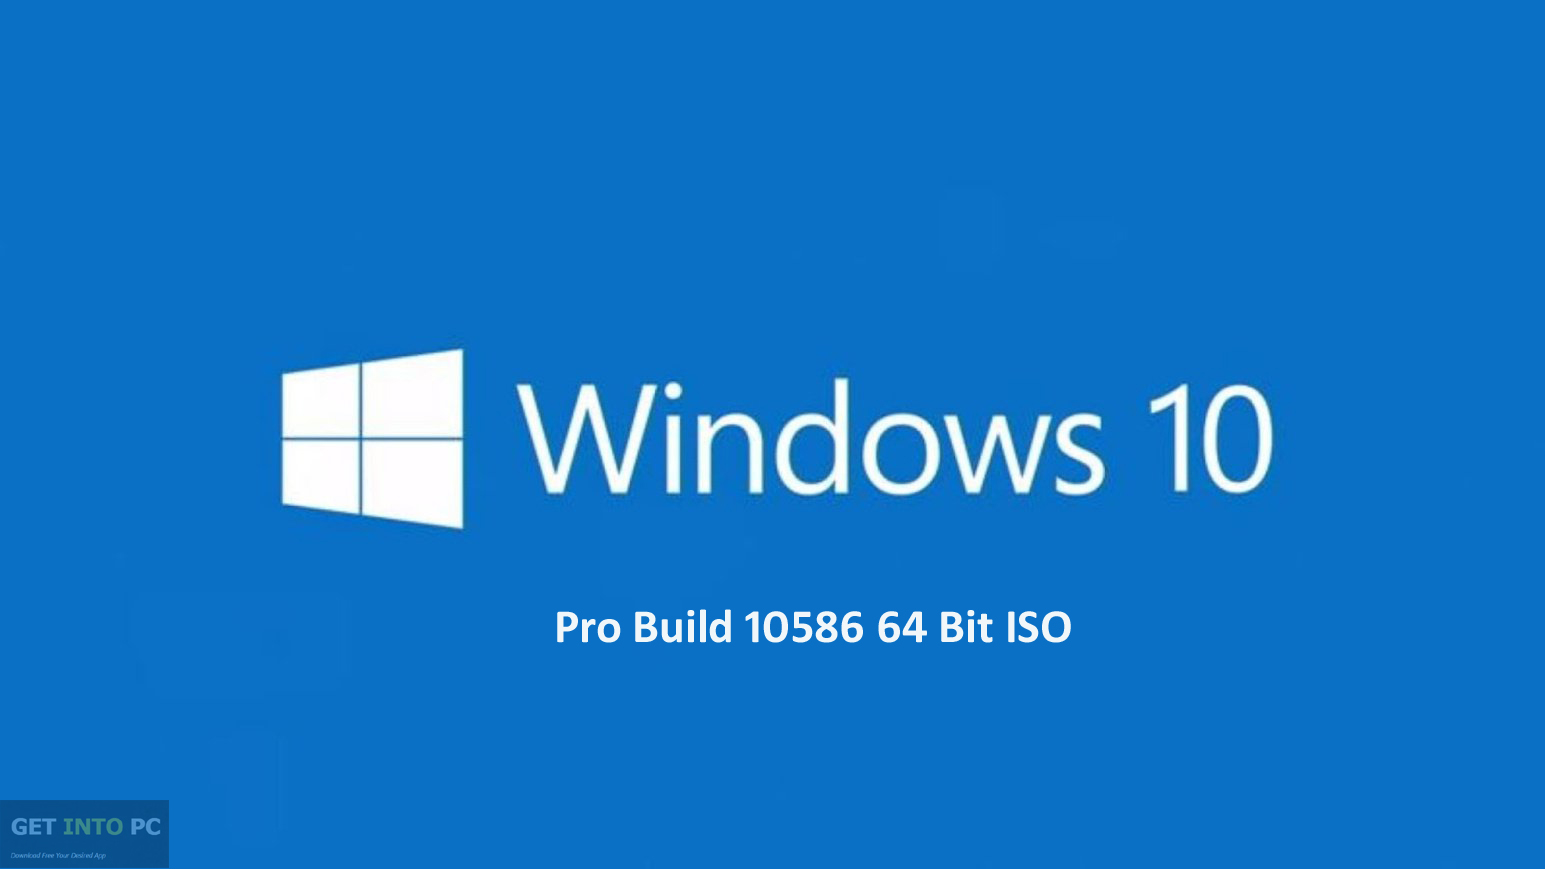 x64 bit windows 10